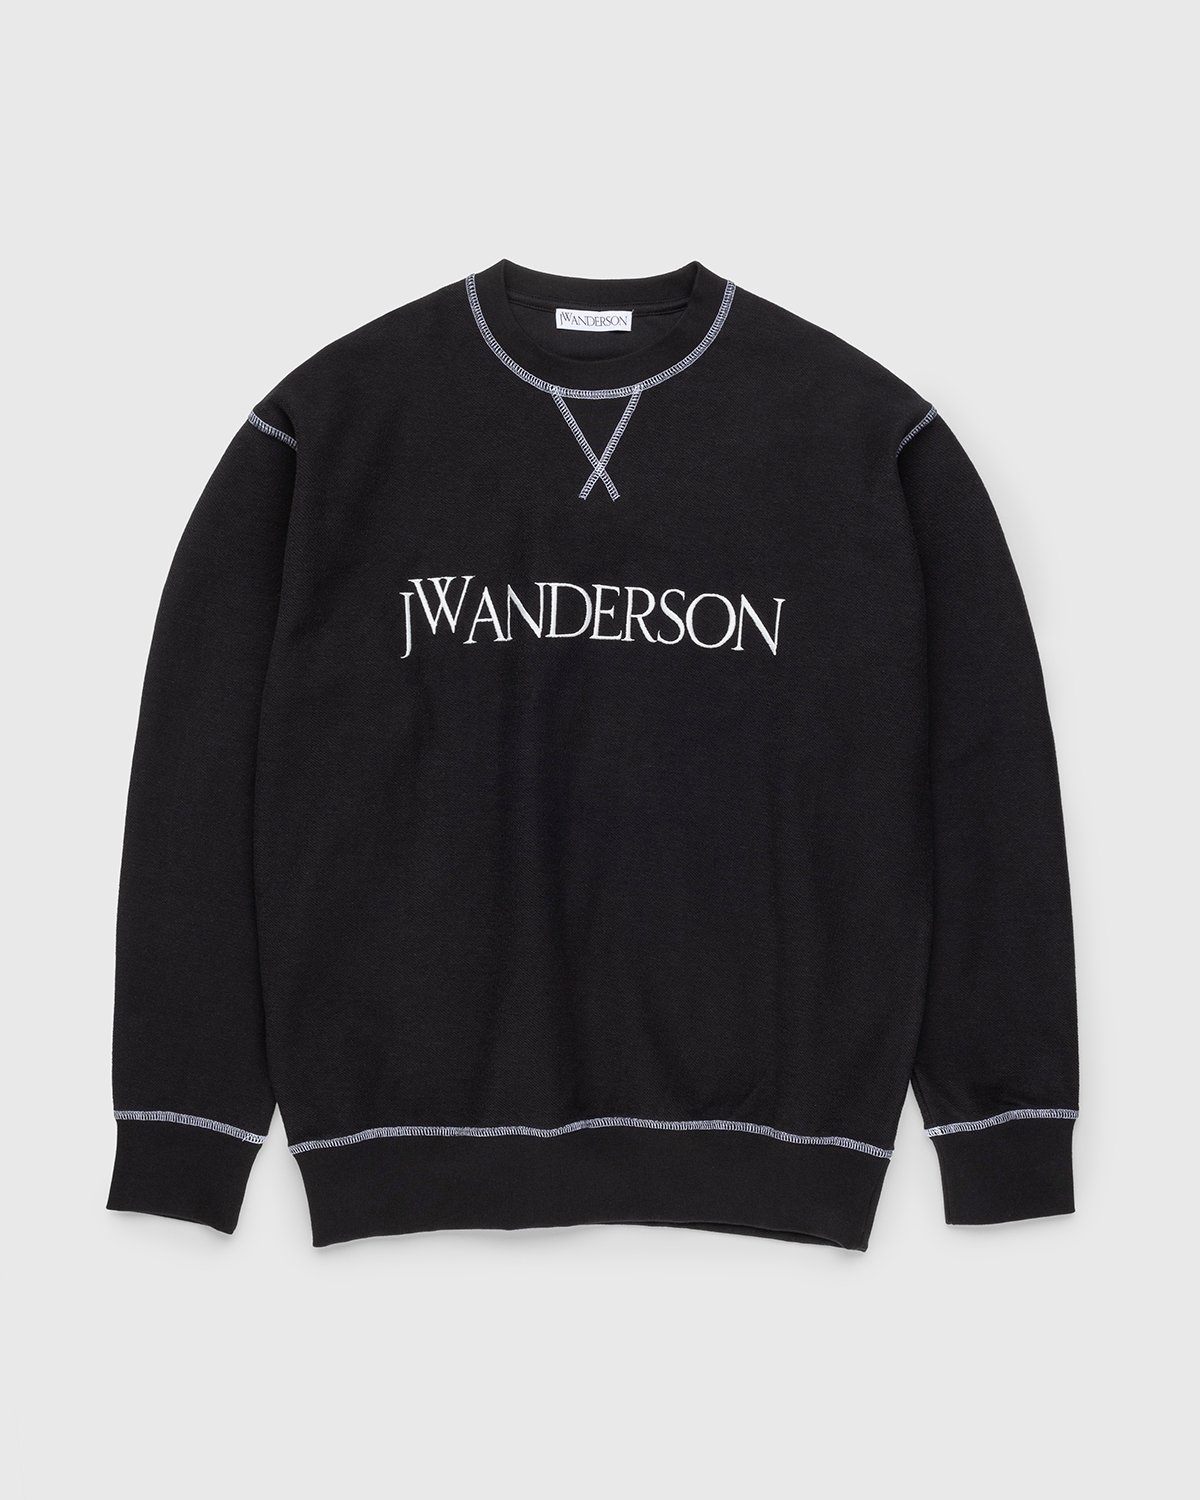 J.W. Anderson – Inside Out Contrast Sweatshirt Black - Sweatshirts - Black - Image 1